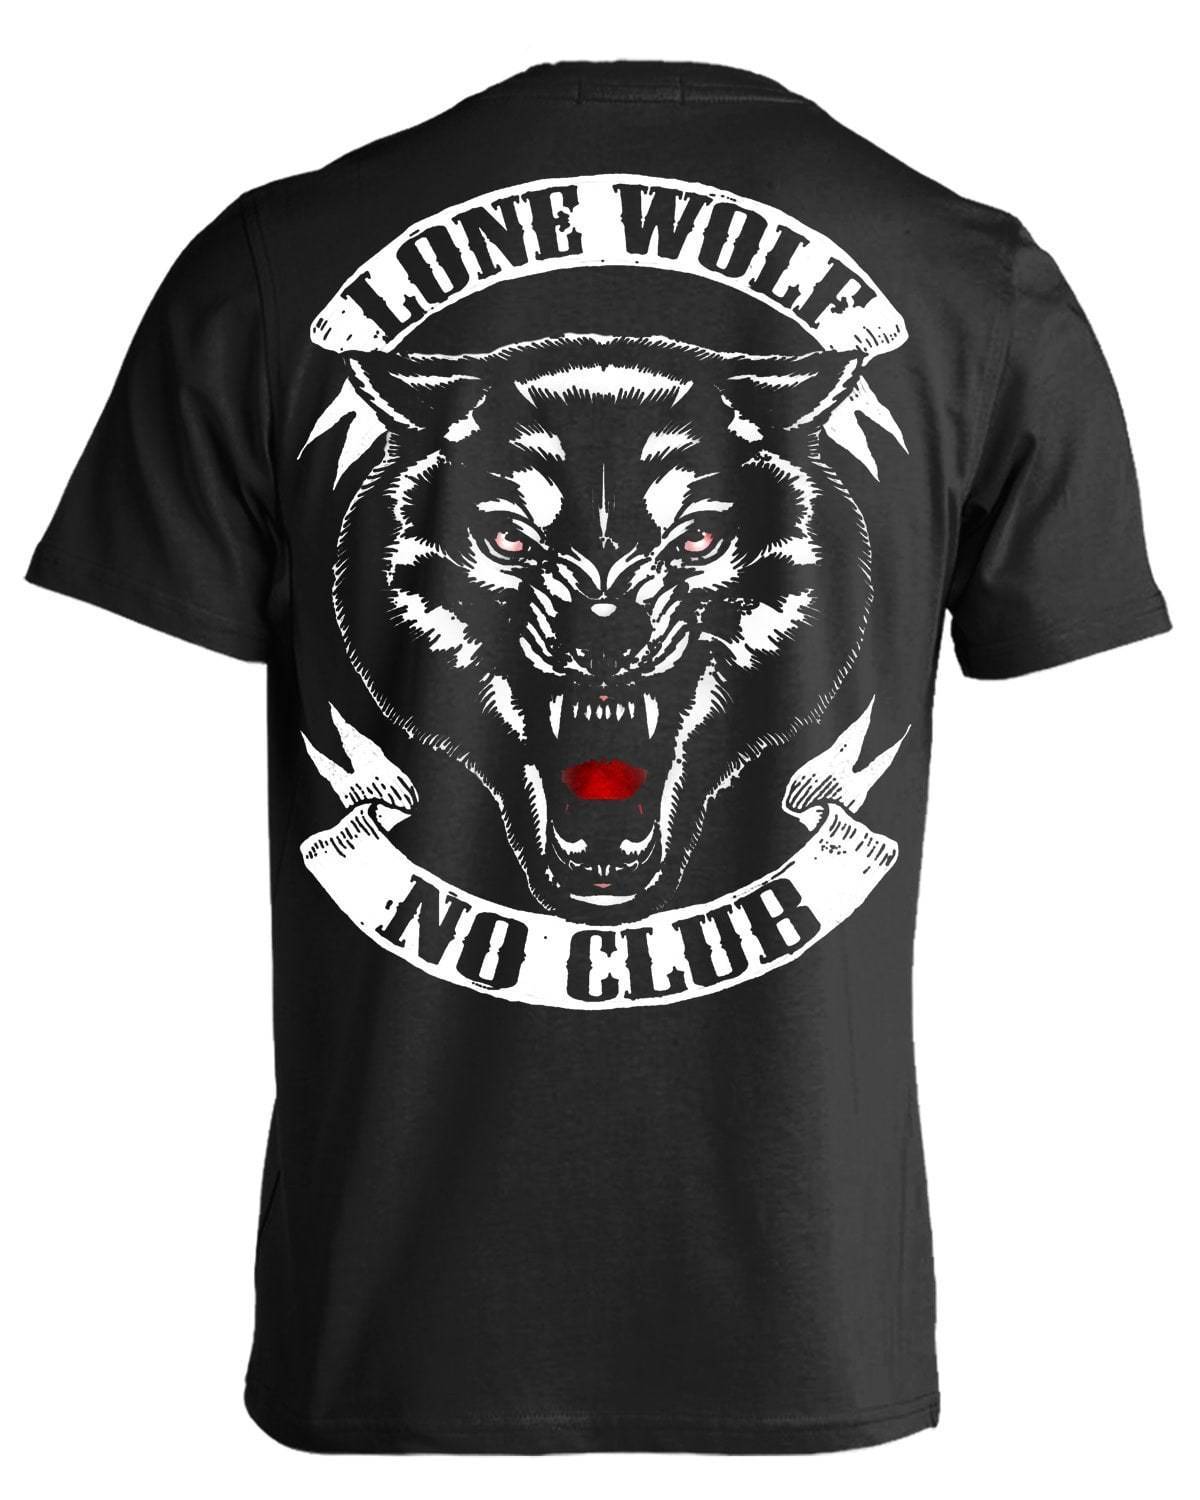 A black Lone Wolf, No Club T-Shirt.